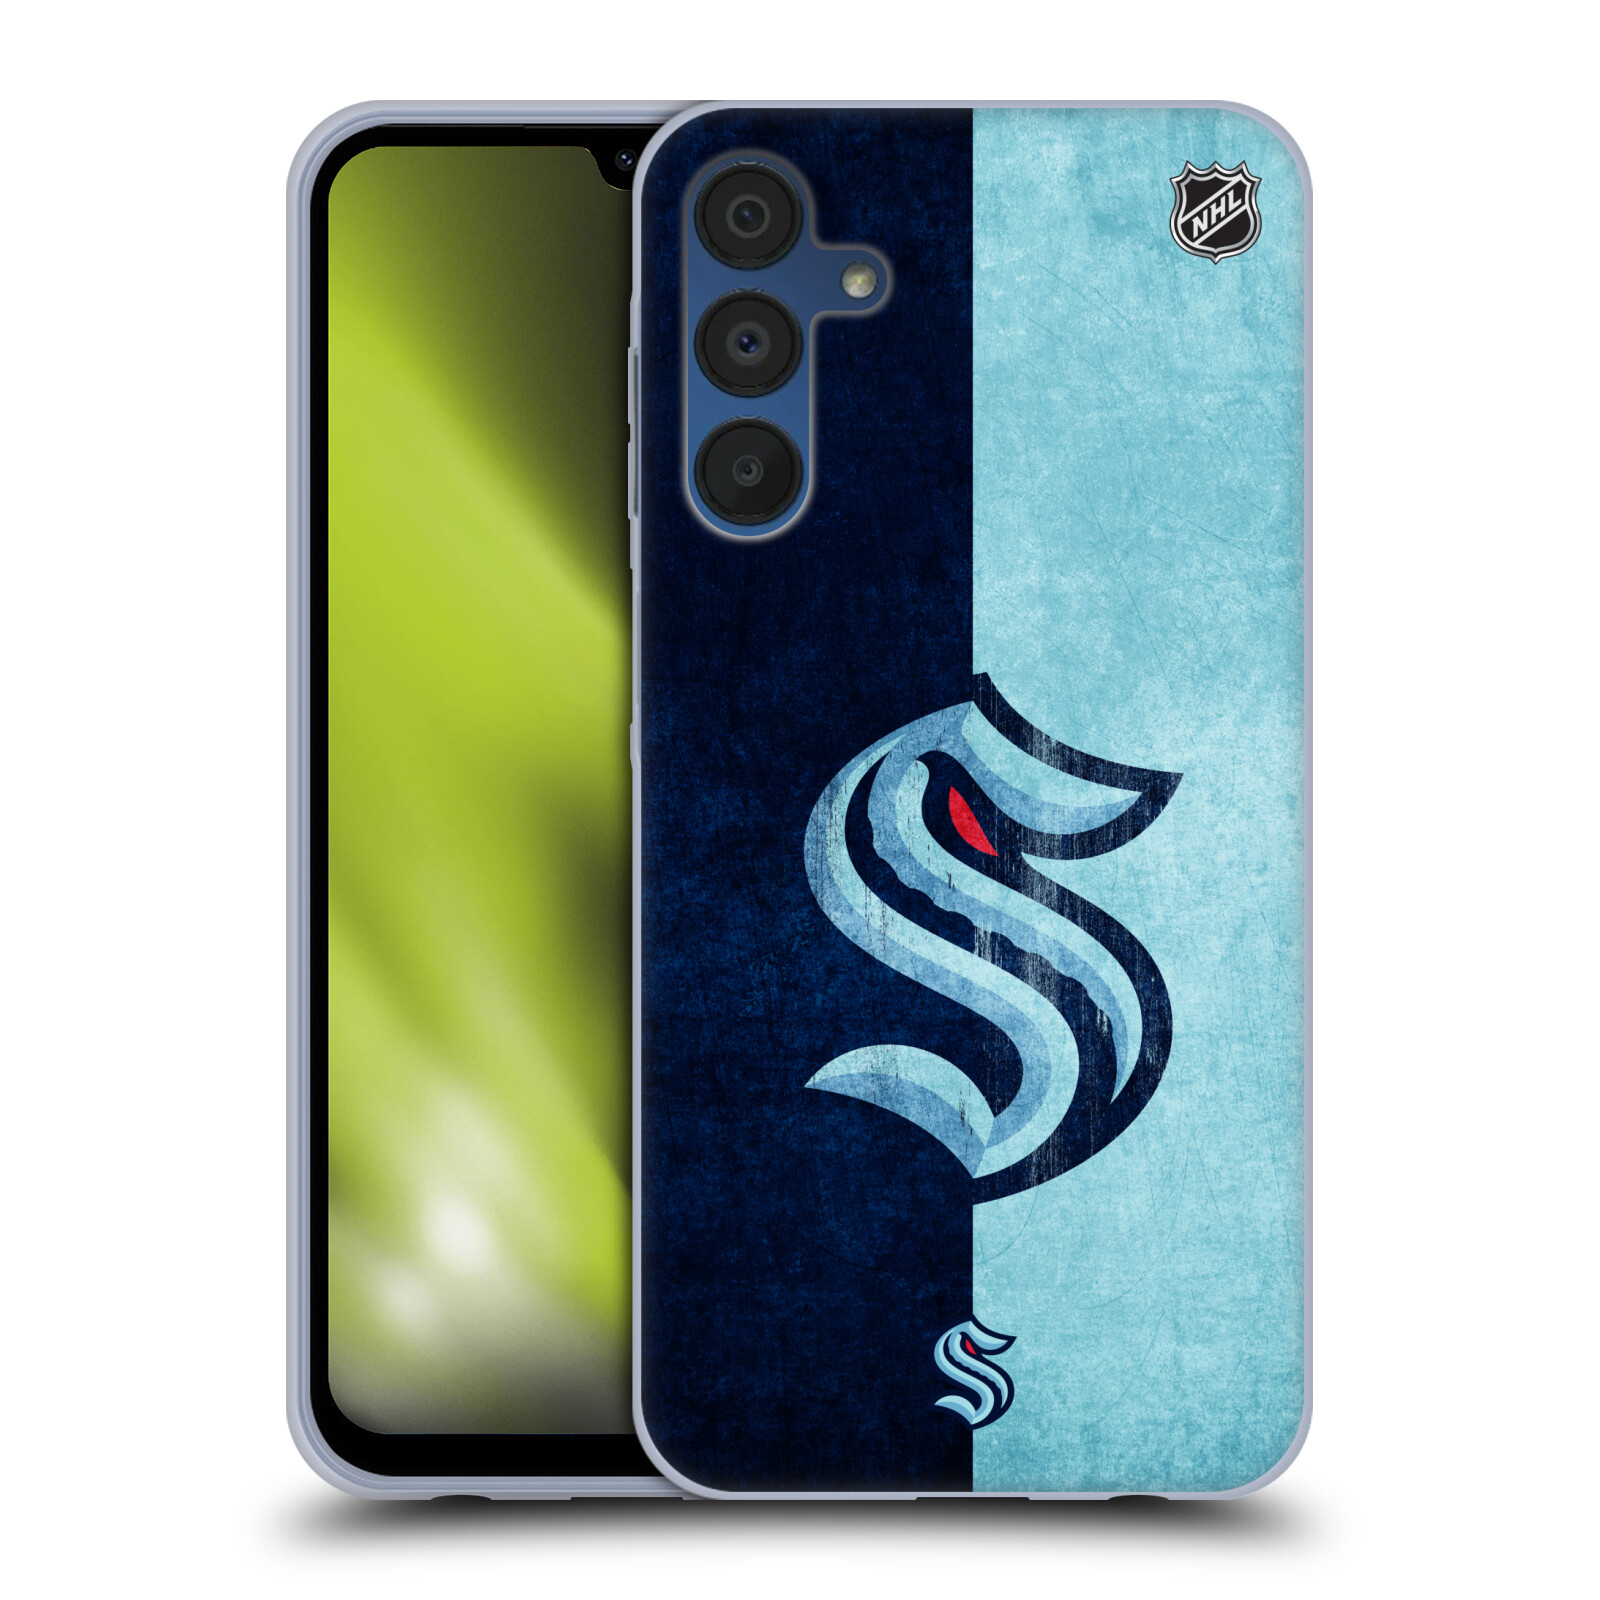 Silikonové pouzdro na mobil Samsung Galaxy A15 / A15 5G - NHL - Půlené logo Seattle Kraken (Silikonový kryt, obal, pouzdro na mobilní telefon Samsung Galaxy A15 / A15 5G s licencovaným motivem NHL - Půlené logo Seattle Kraken)